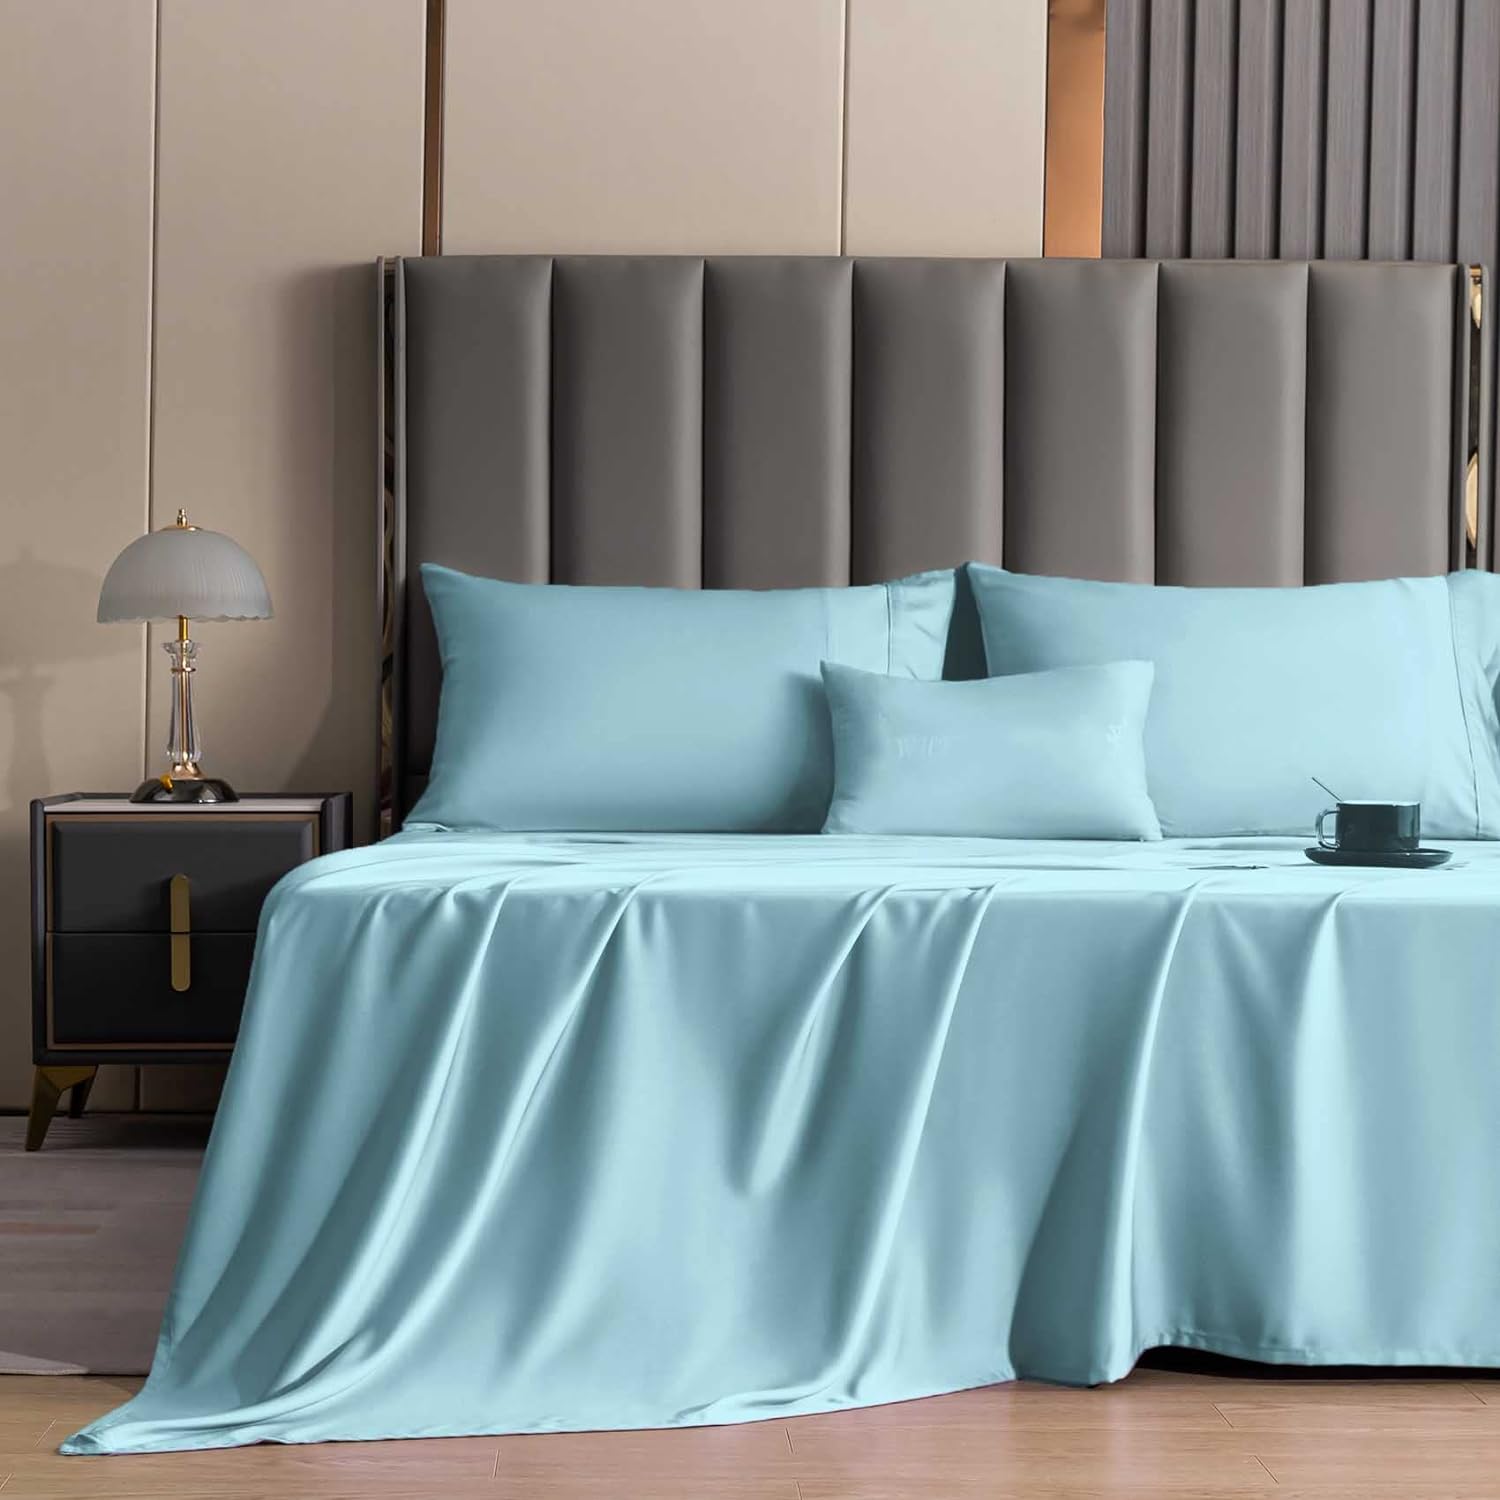 100% Bamboo Viscose Bed Sheet Set, Cooling Deep Pocket Bed Sheets-ultra Soft  & Breathable 4 Piece Set, emerald Green 